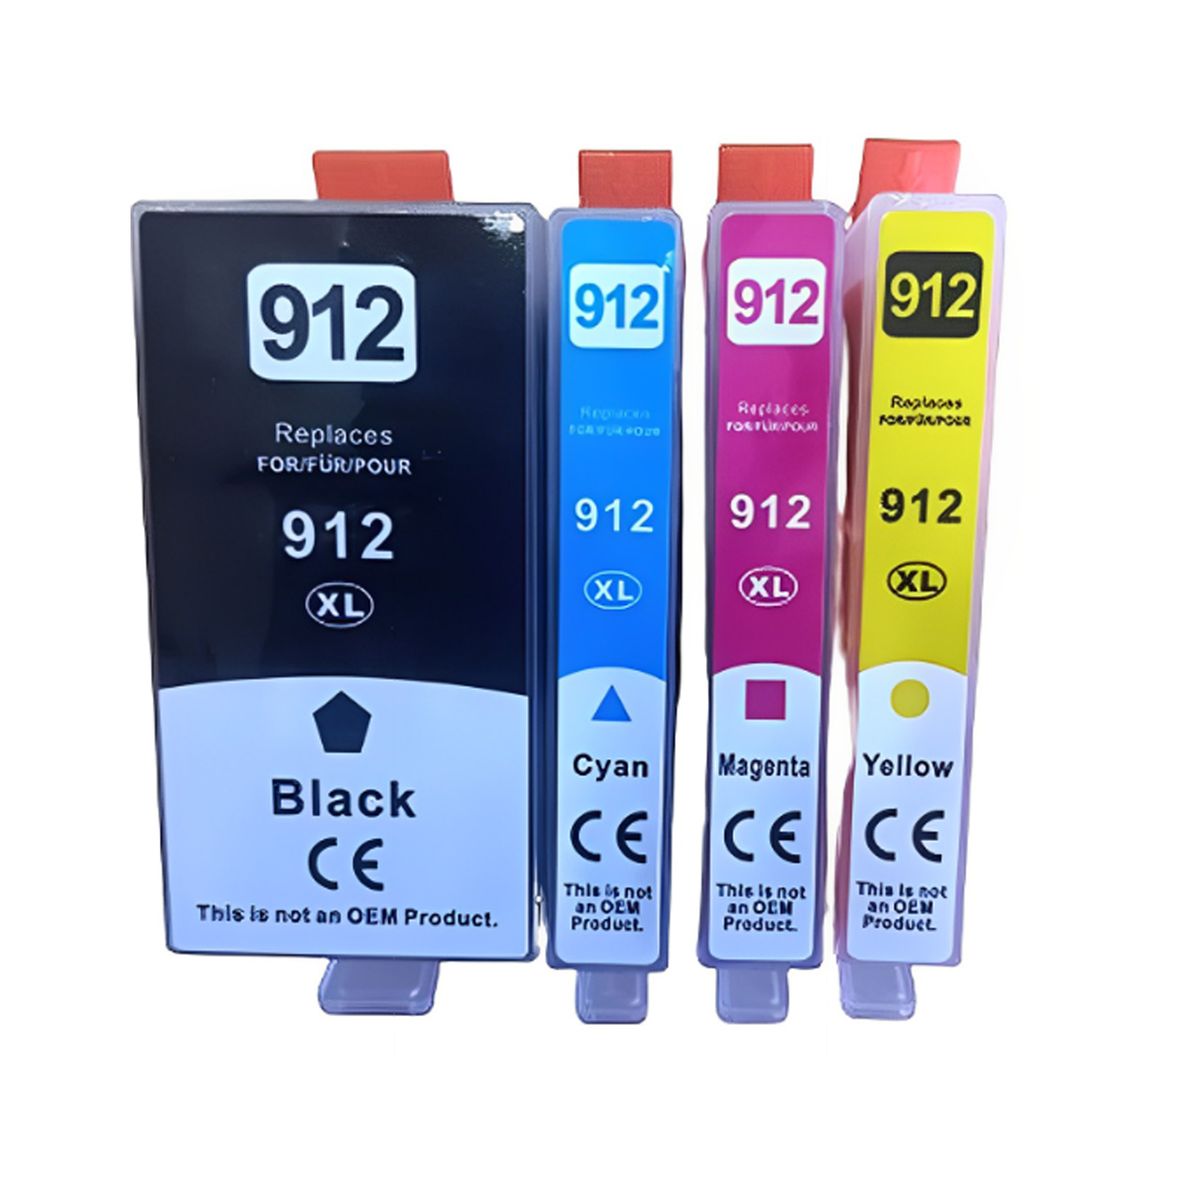 Multipack of High Capacity HP 912XL Ink Cartridges